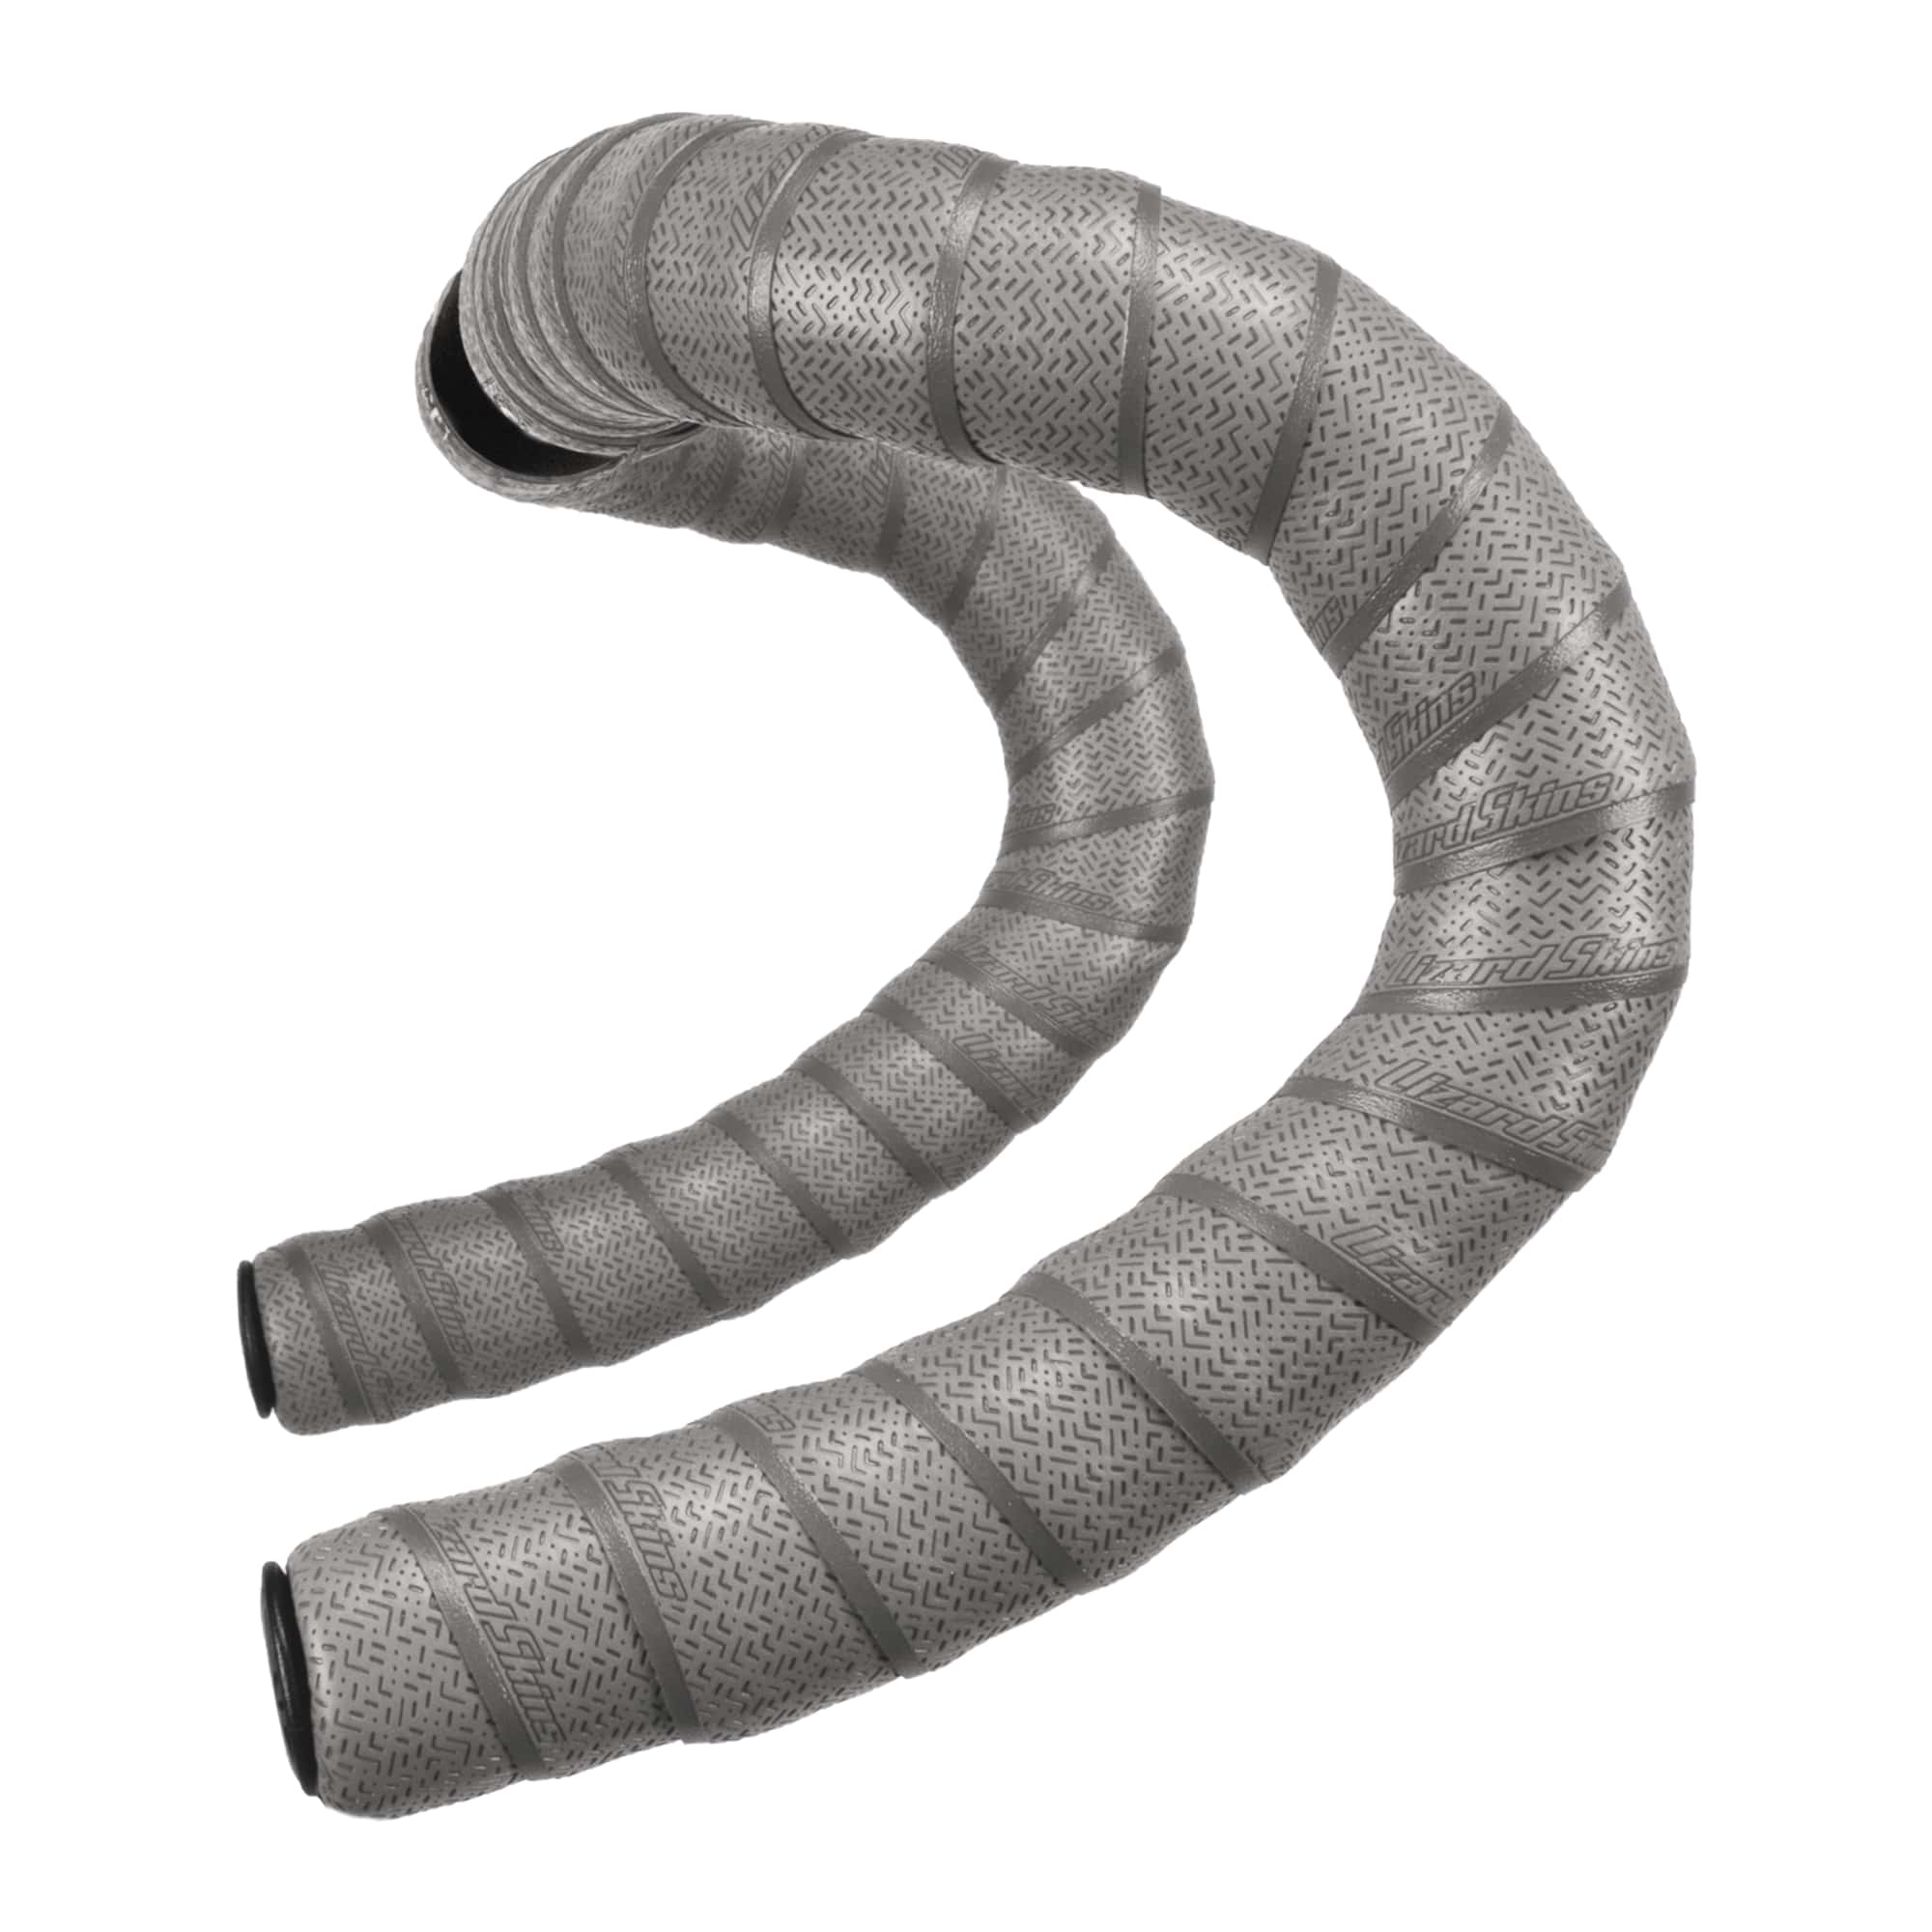 Обмотка руля Lizard Skins DSP V2, толщина 3,2мм, длина 2260мм, серая (Cool Gray) фото 